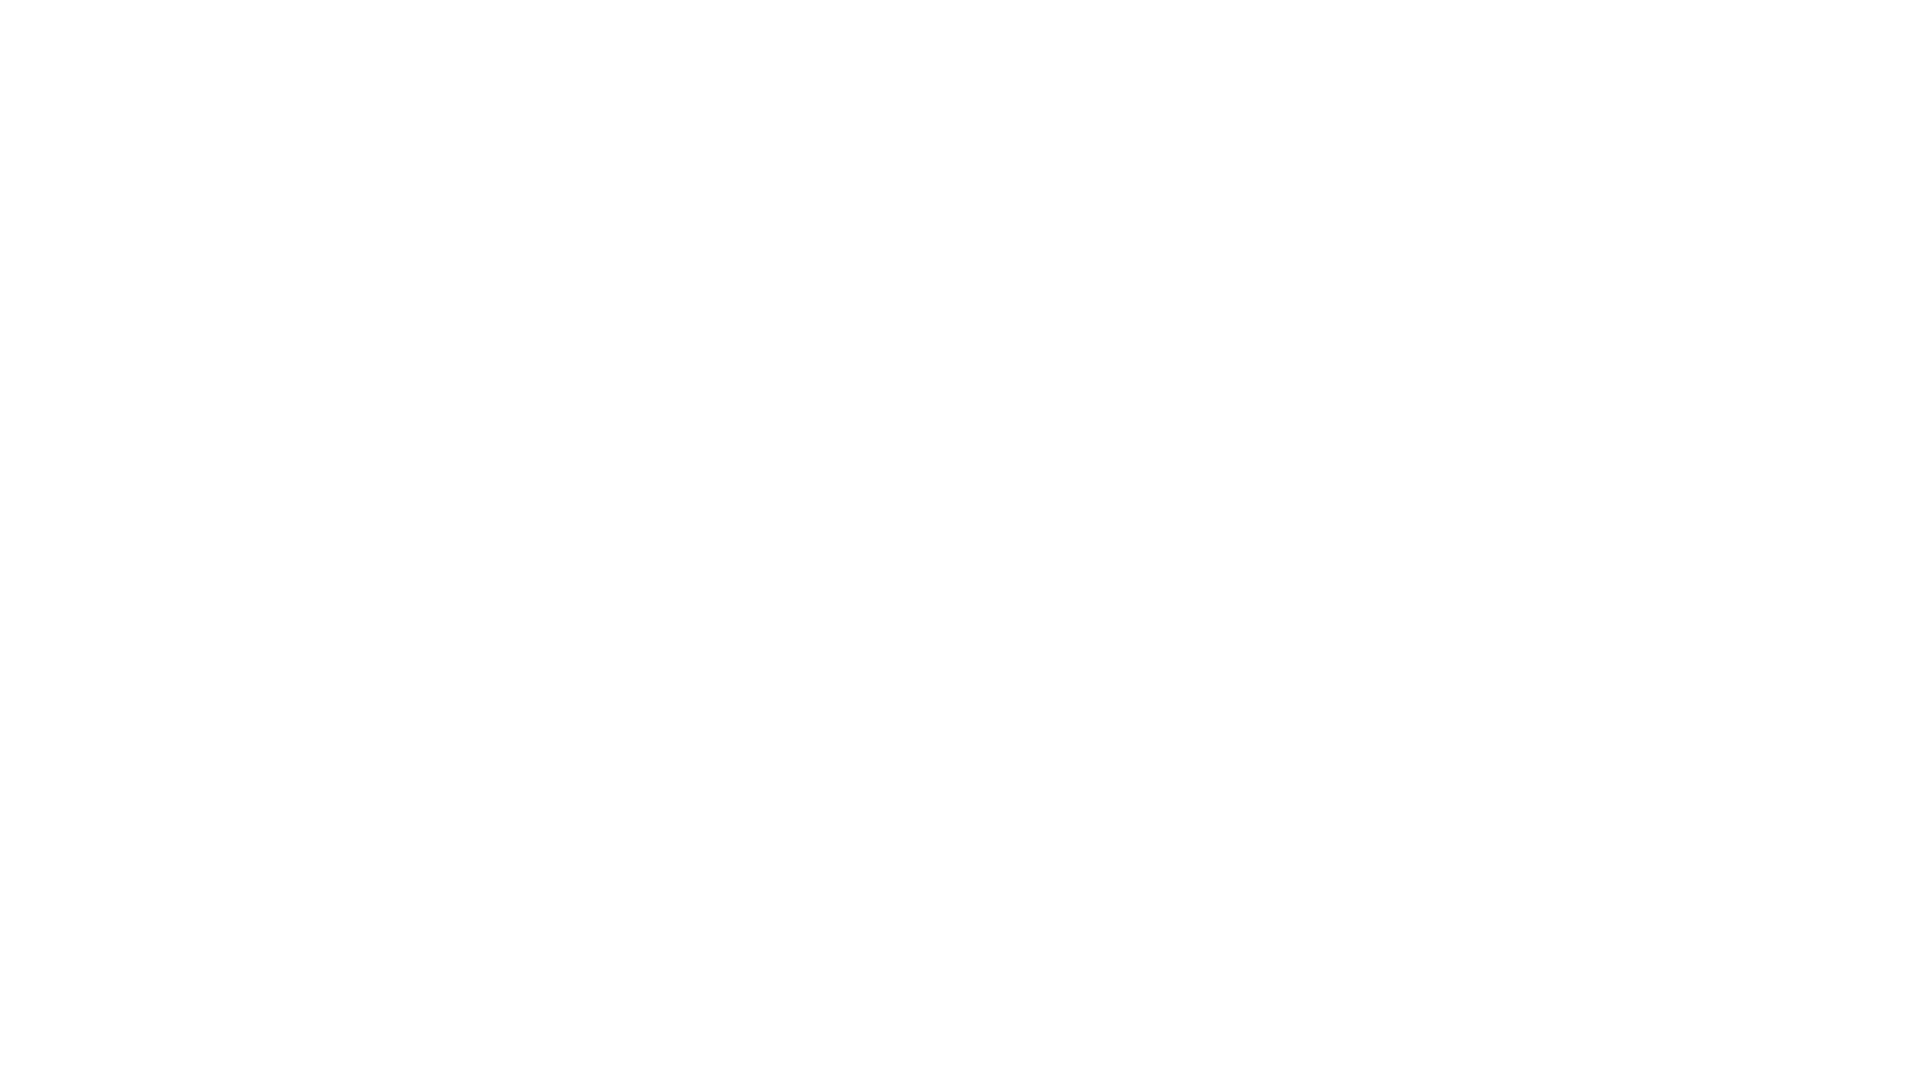 star wars episode i the phantom menace movie